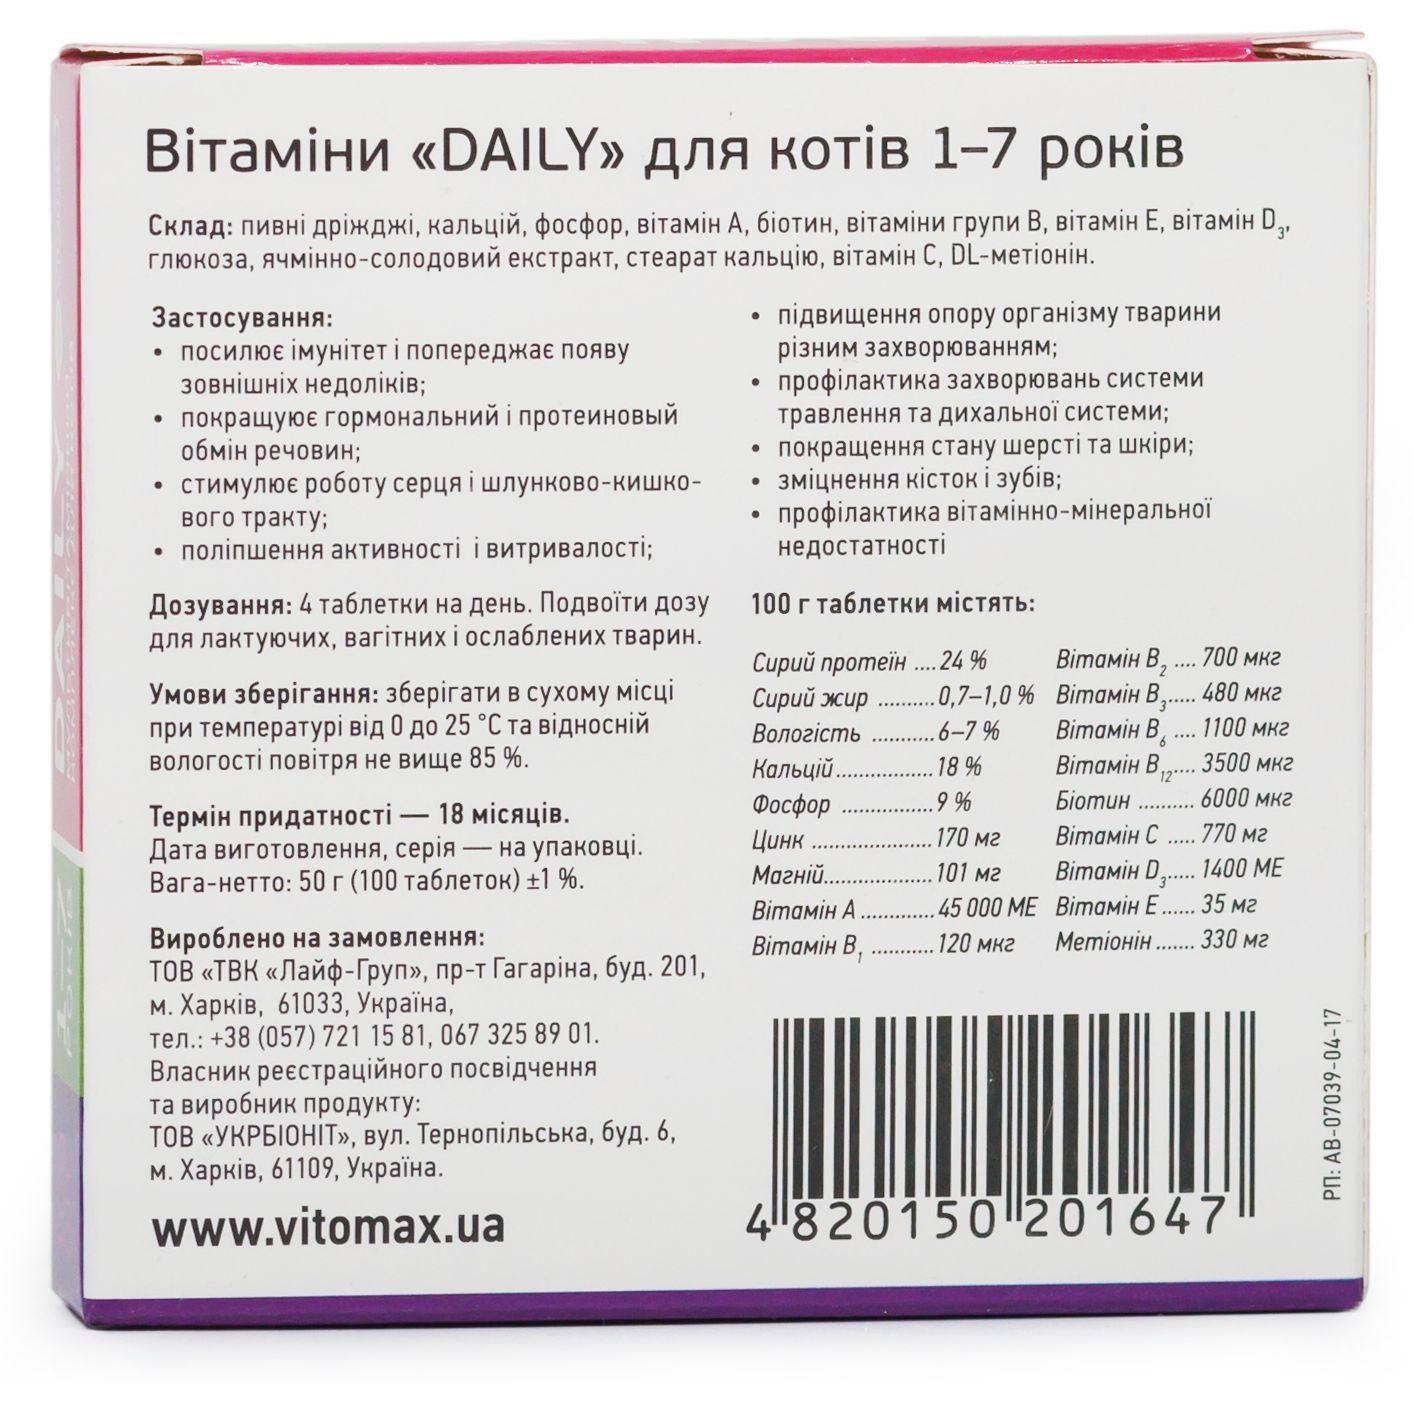 Мультивитаминный комплекс Vitomax Daily для кошек 1-7 лет, 100 таблеток - фото 3